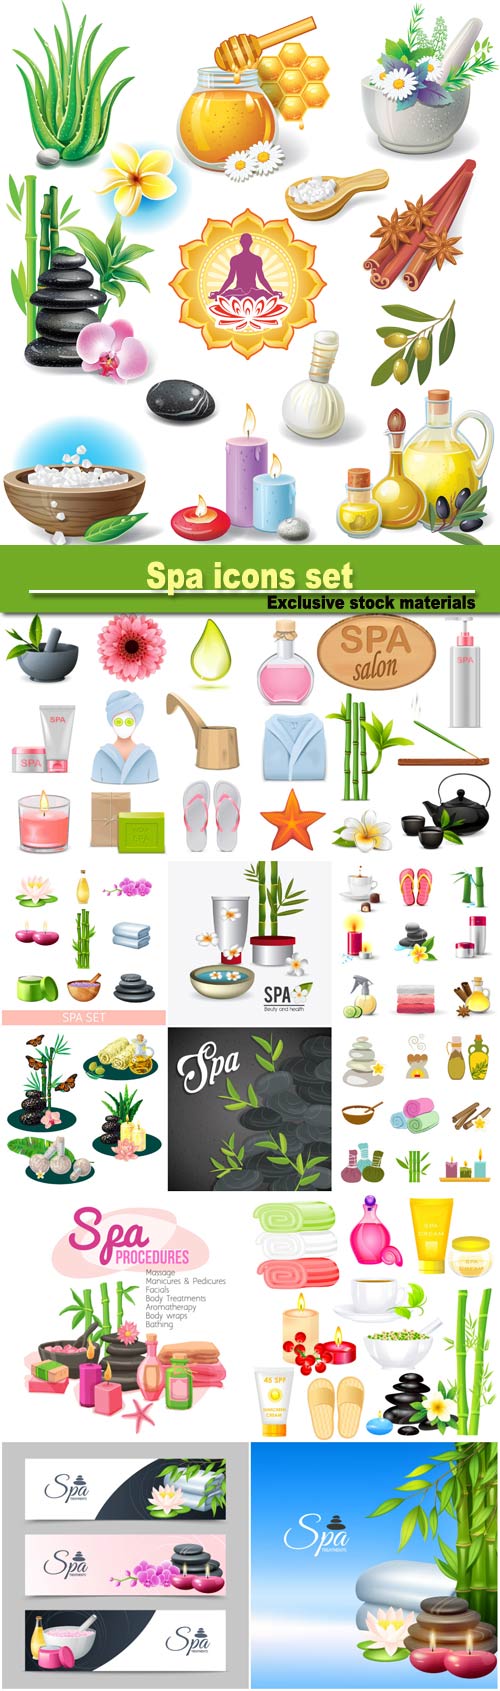 Spa icons, set of spa treatment symbols